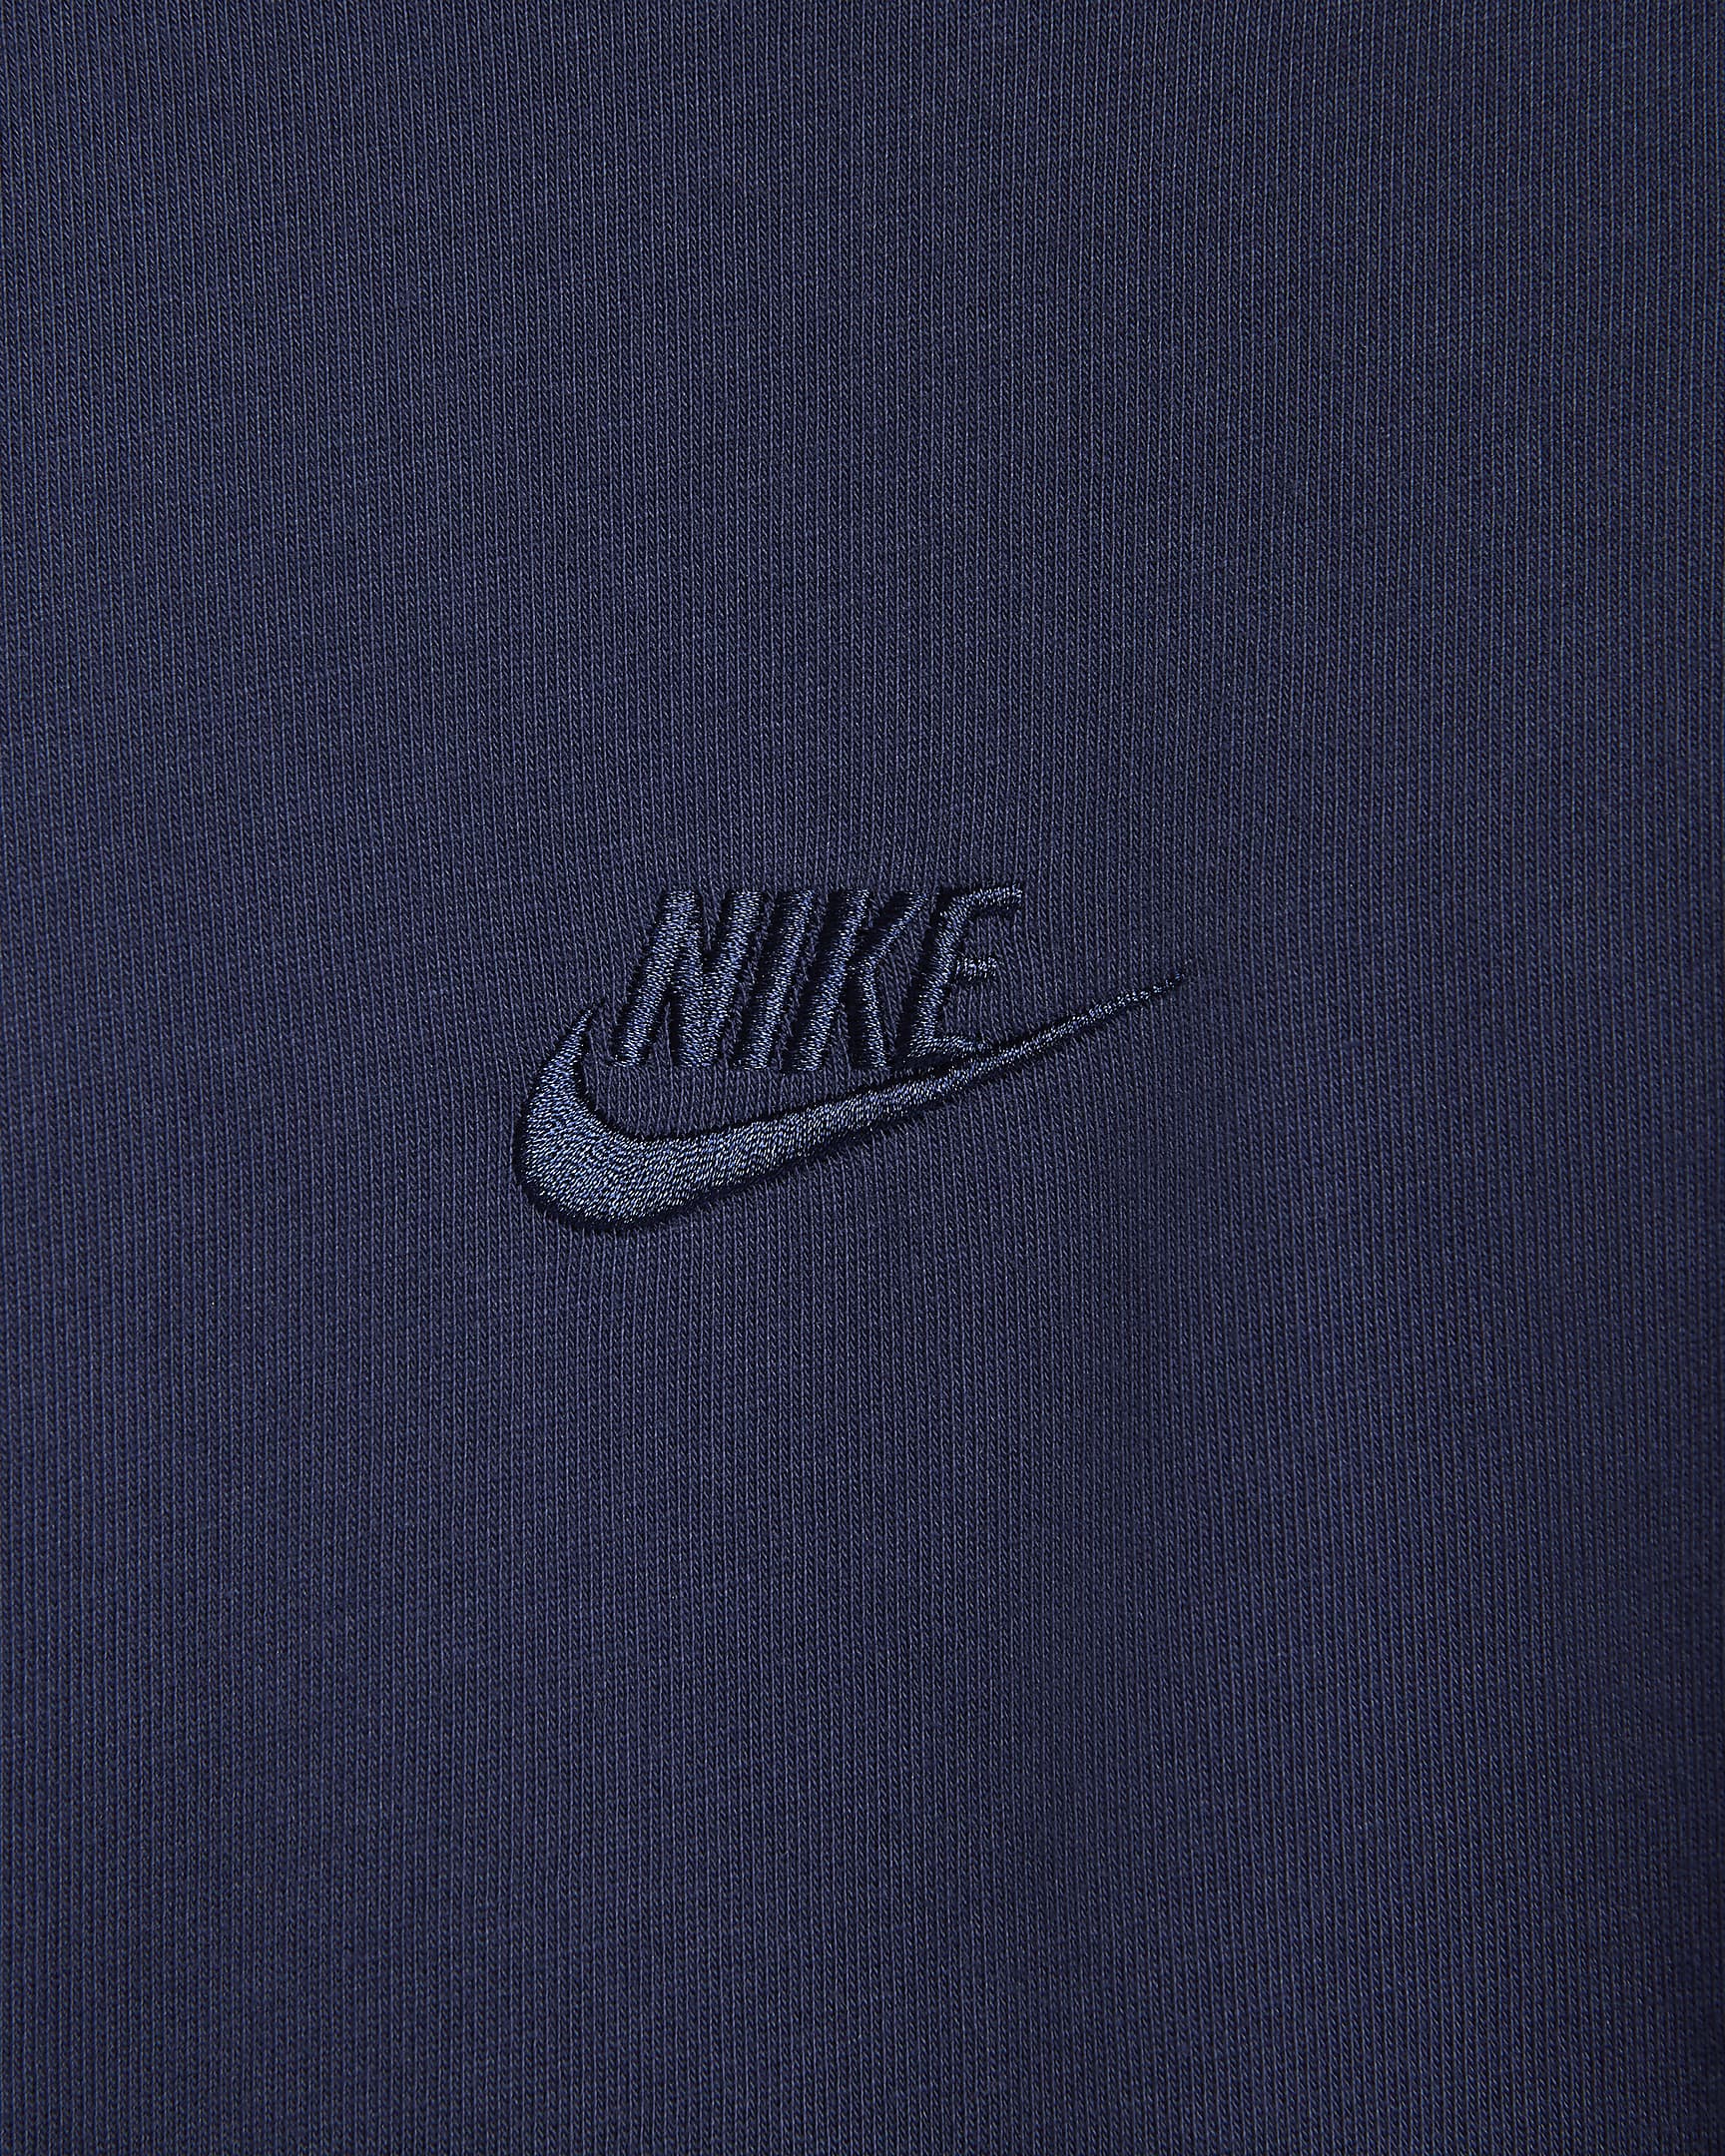 Nike Sportswear Premium Essentials Men's Tank Top. Nike CA